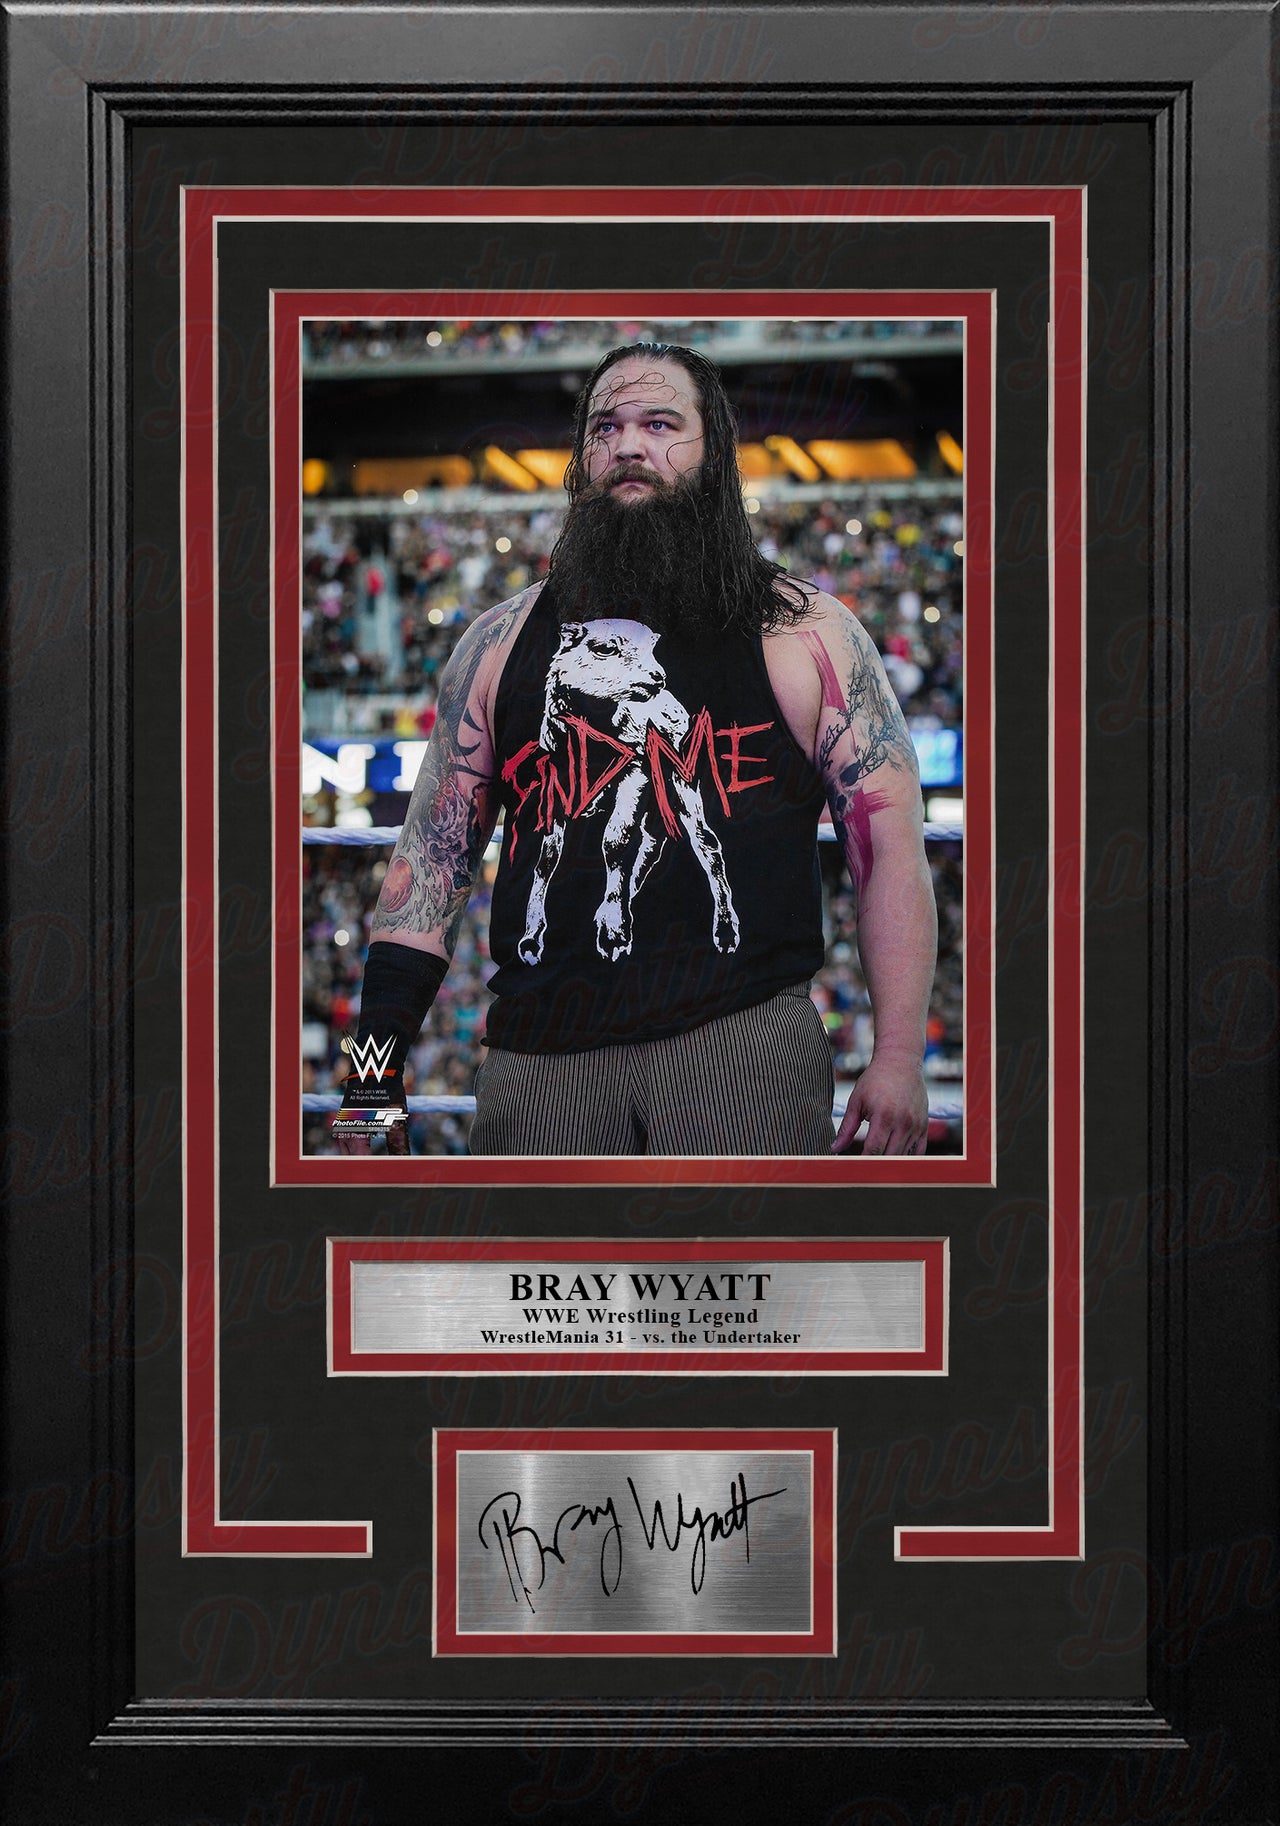 Bray Wyatt WrestleMania 31 8" x 10" Framed WWE Wrestling Photo with Engraved Autograph